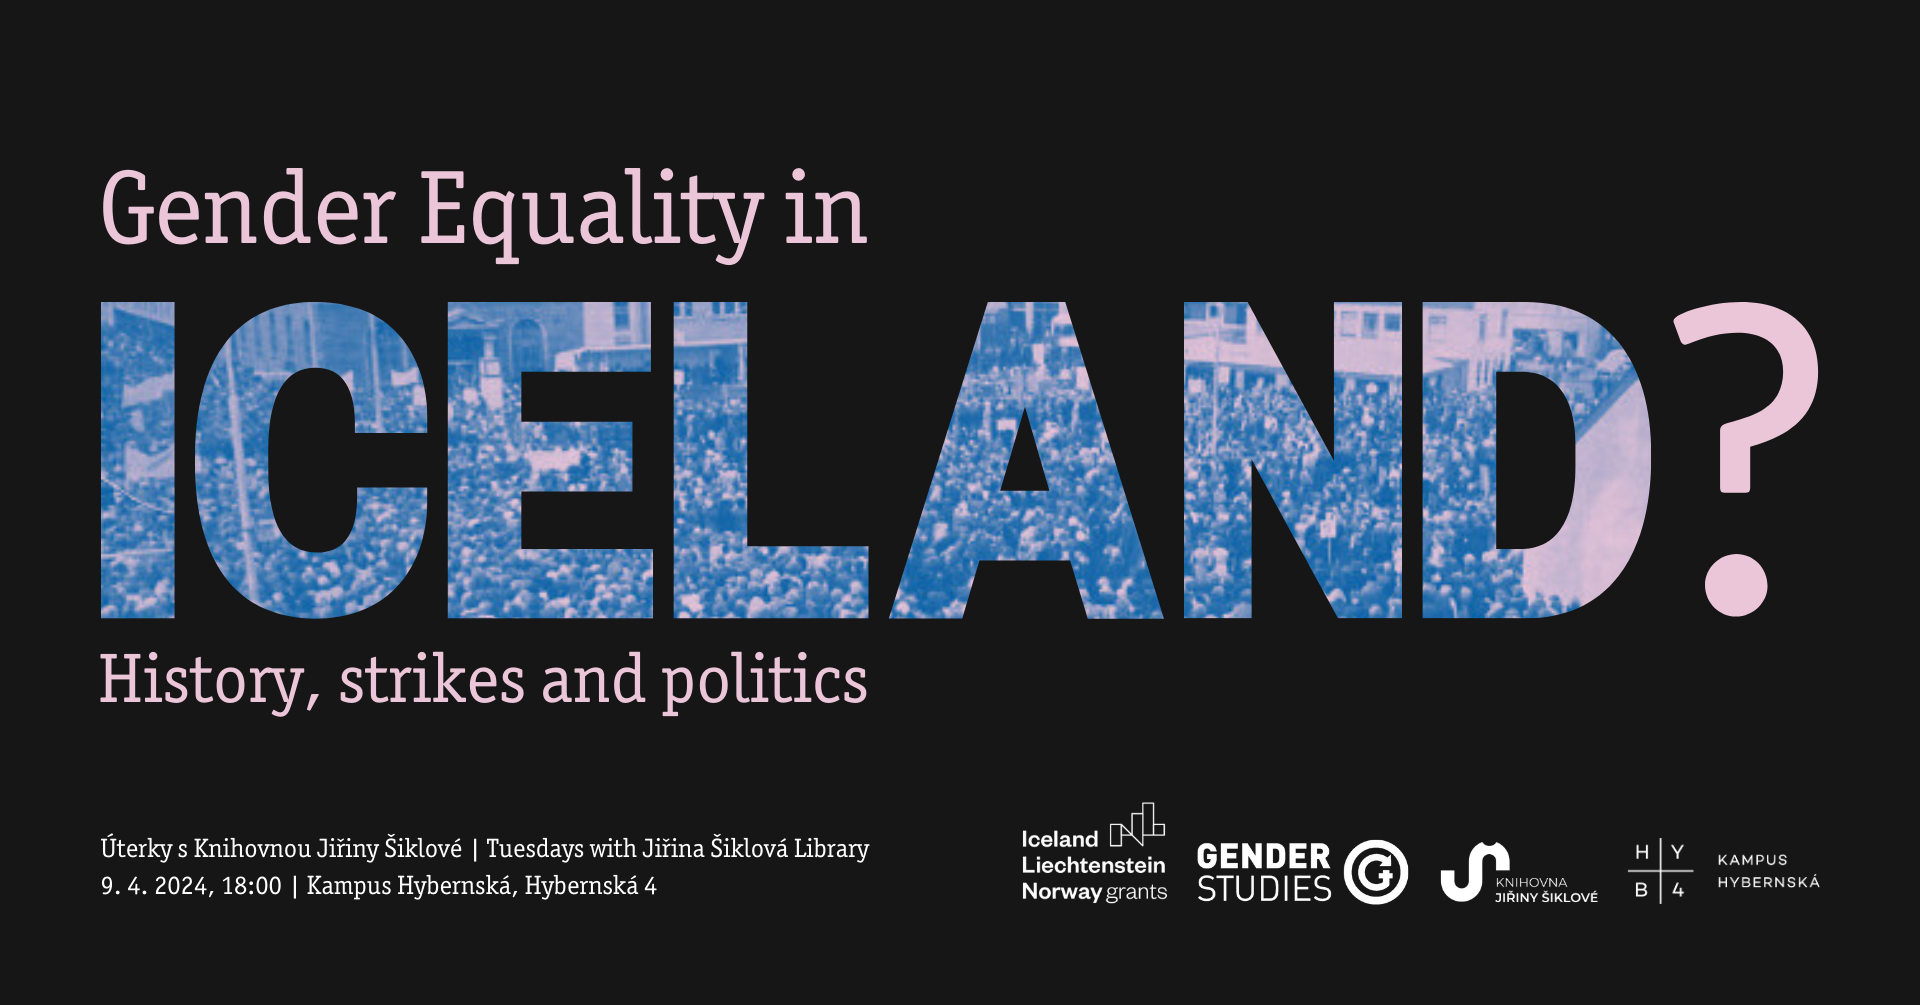 Úterky s Knihovnou Jiřiny Šiklové - Gender Equality in Iceland? History, Strikes, and Politics